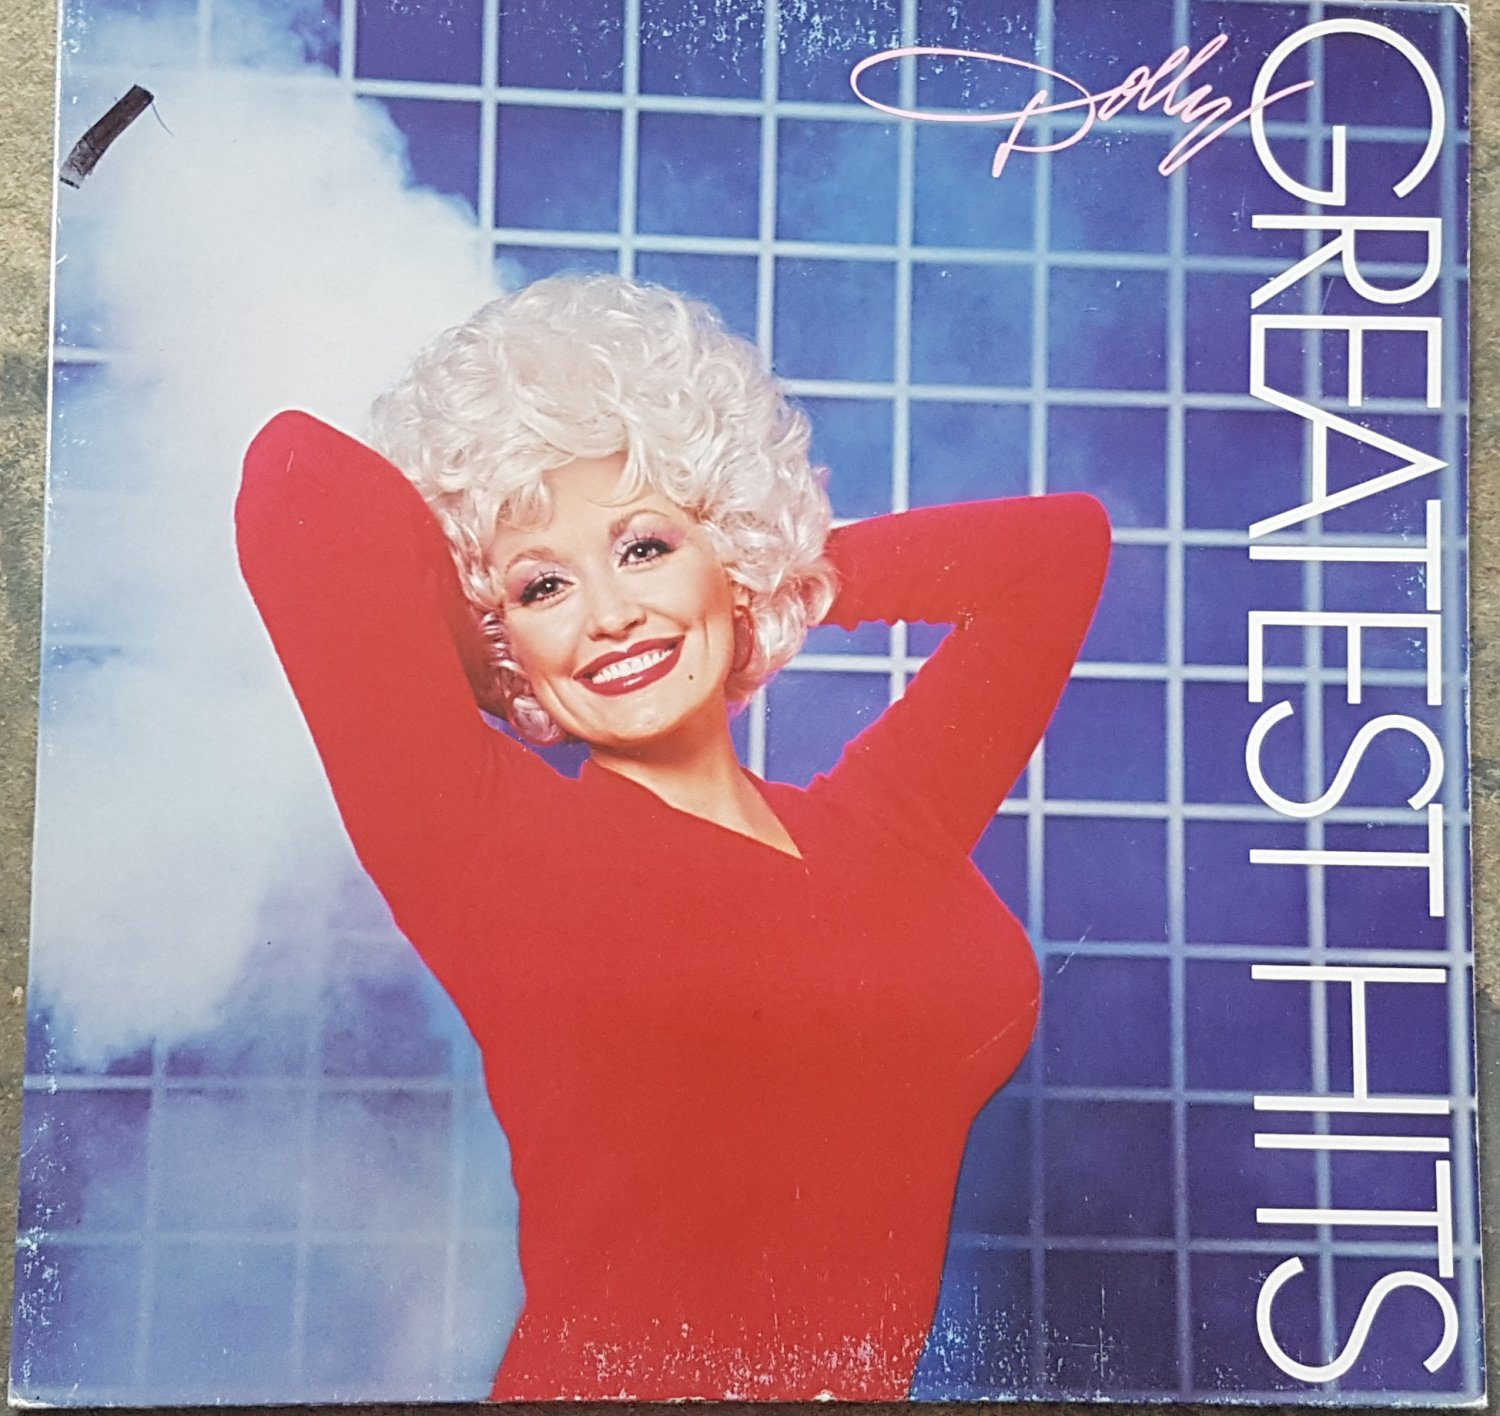 Dolly Parton Greatest Hits 1982 Vinyl LP Record